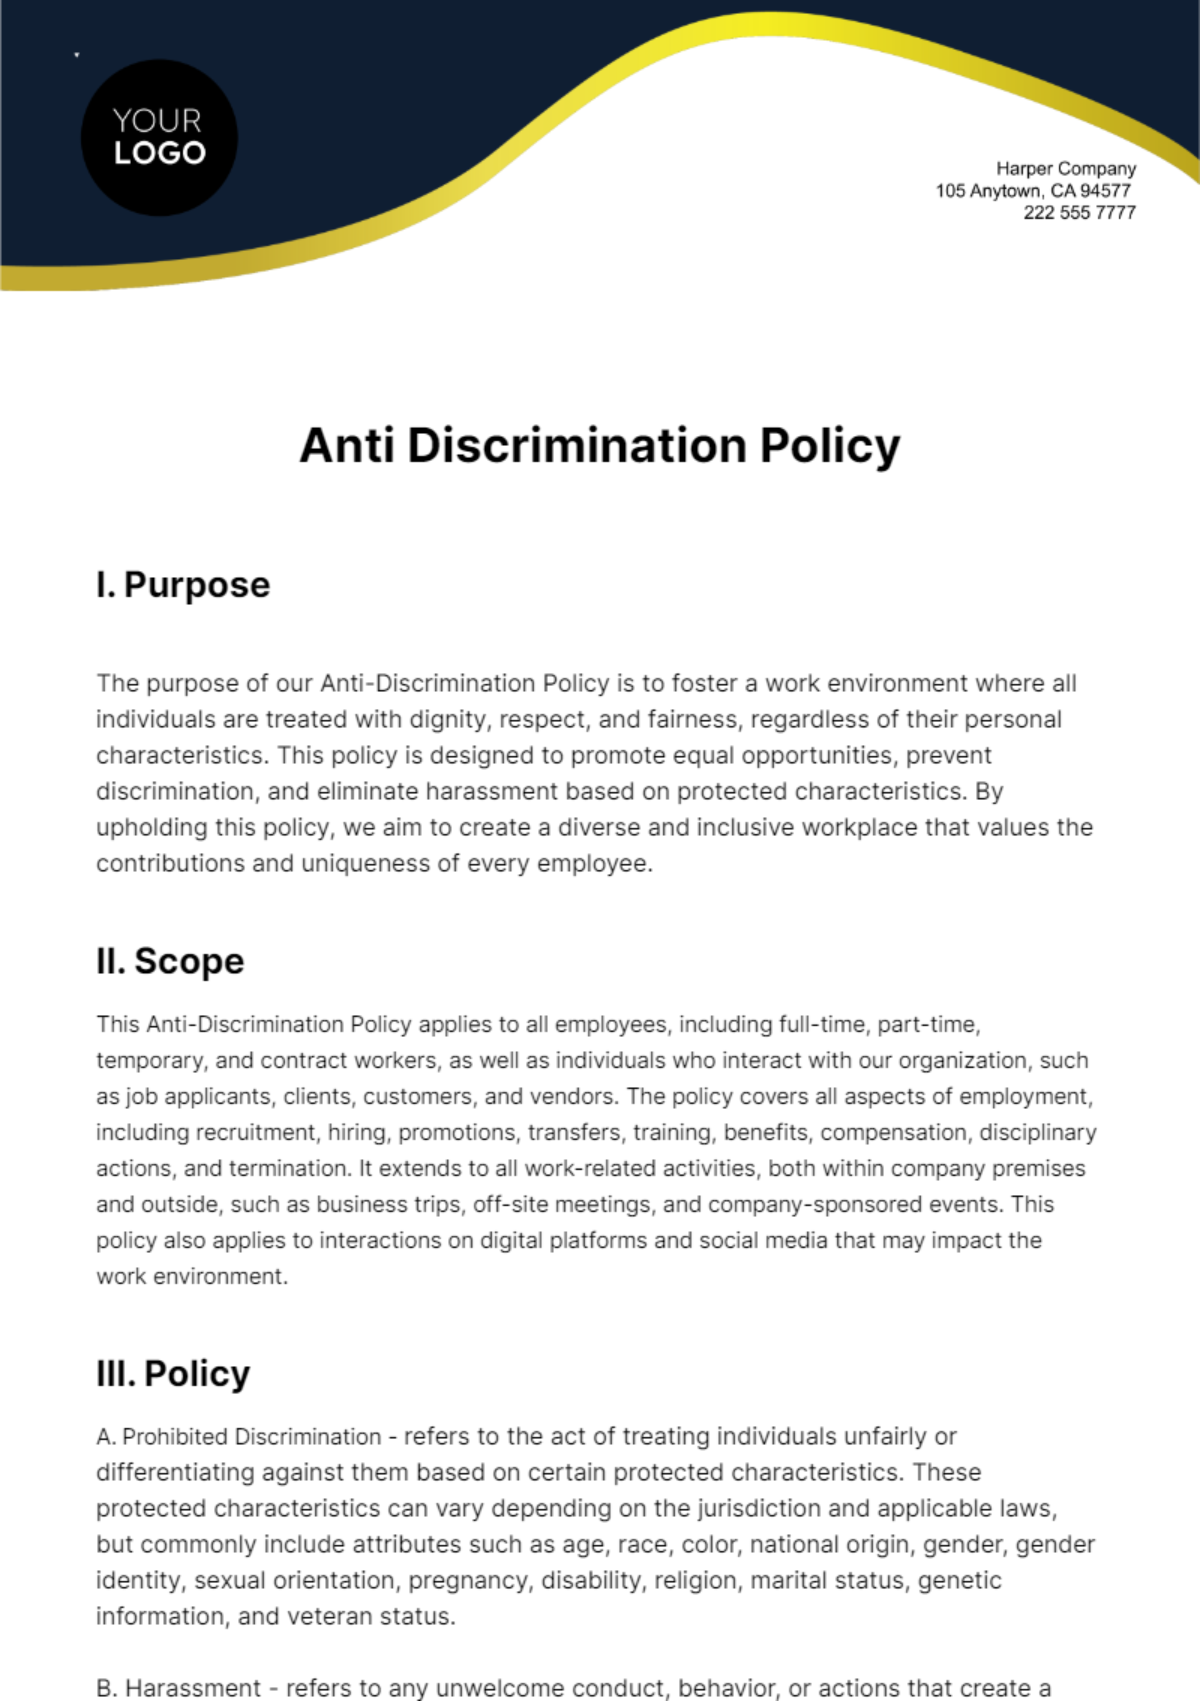 Anti-Discrimination Policy  Template